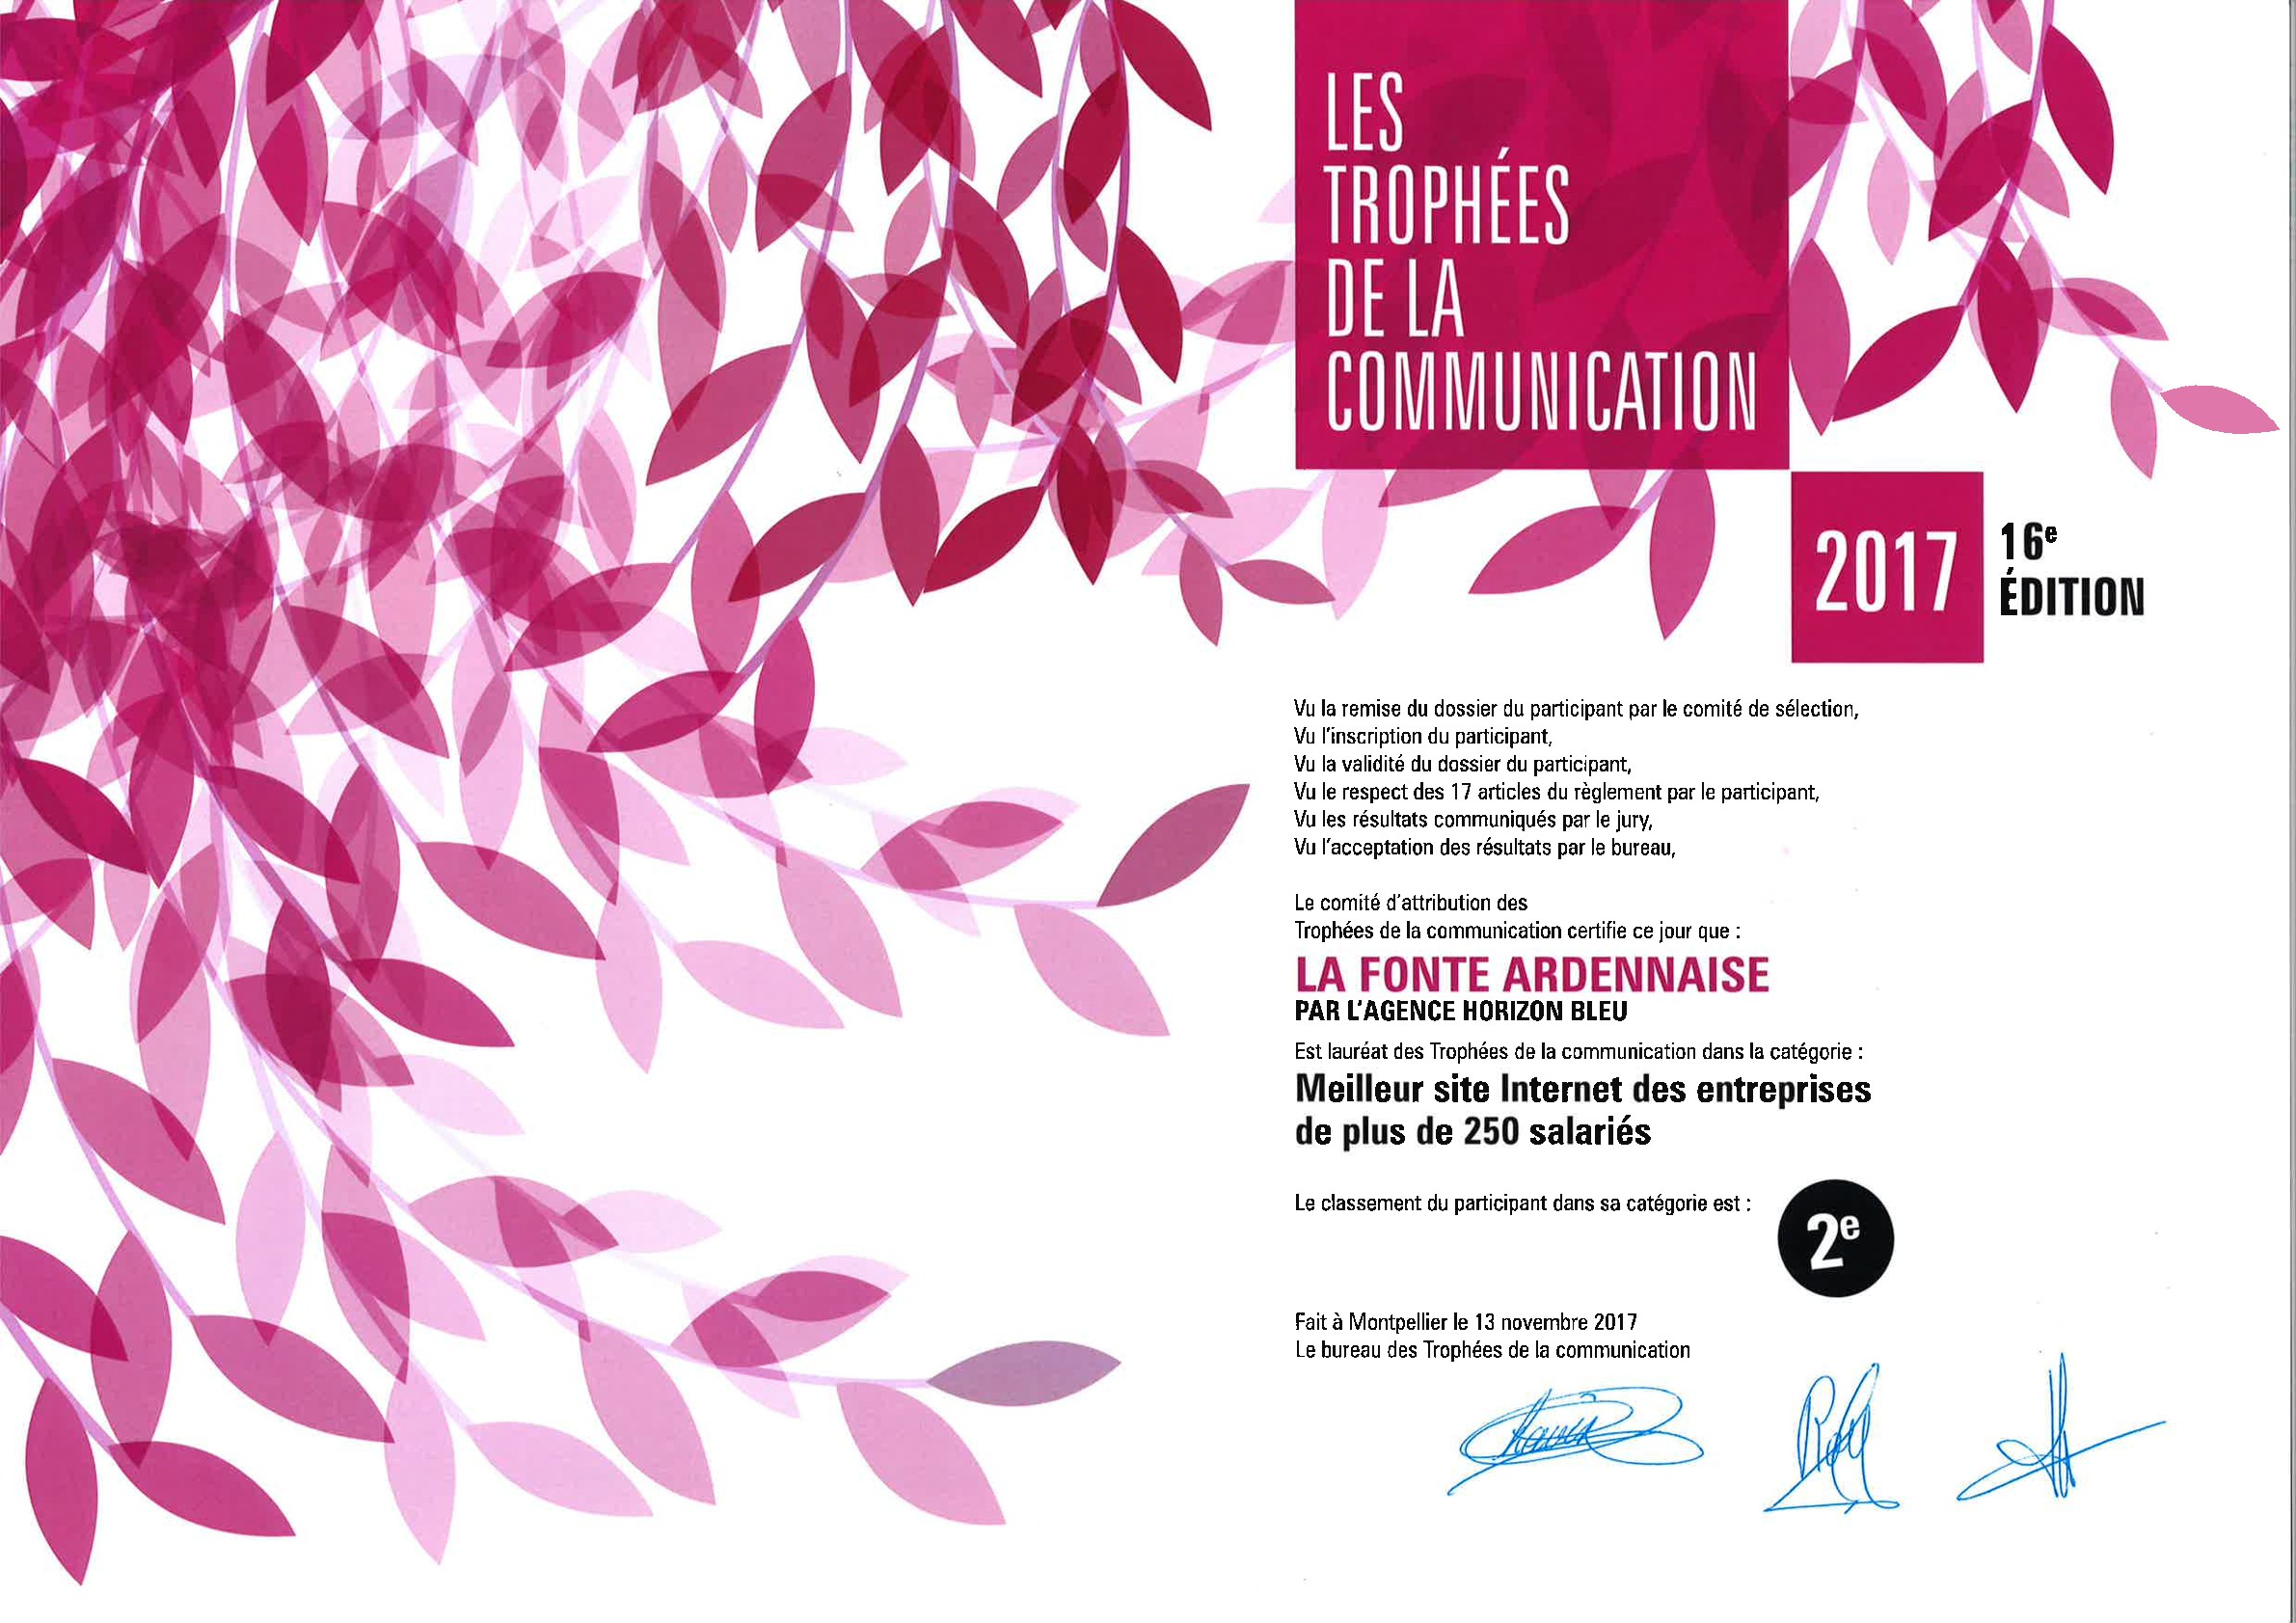 A Communication trophy award for LA FONTE ARDENNAISE !